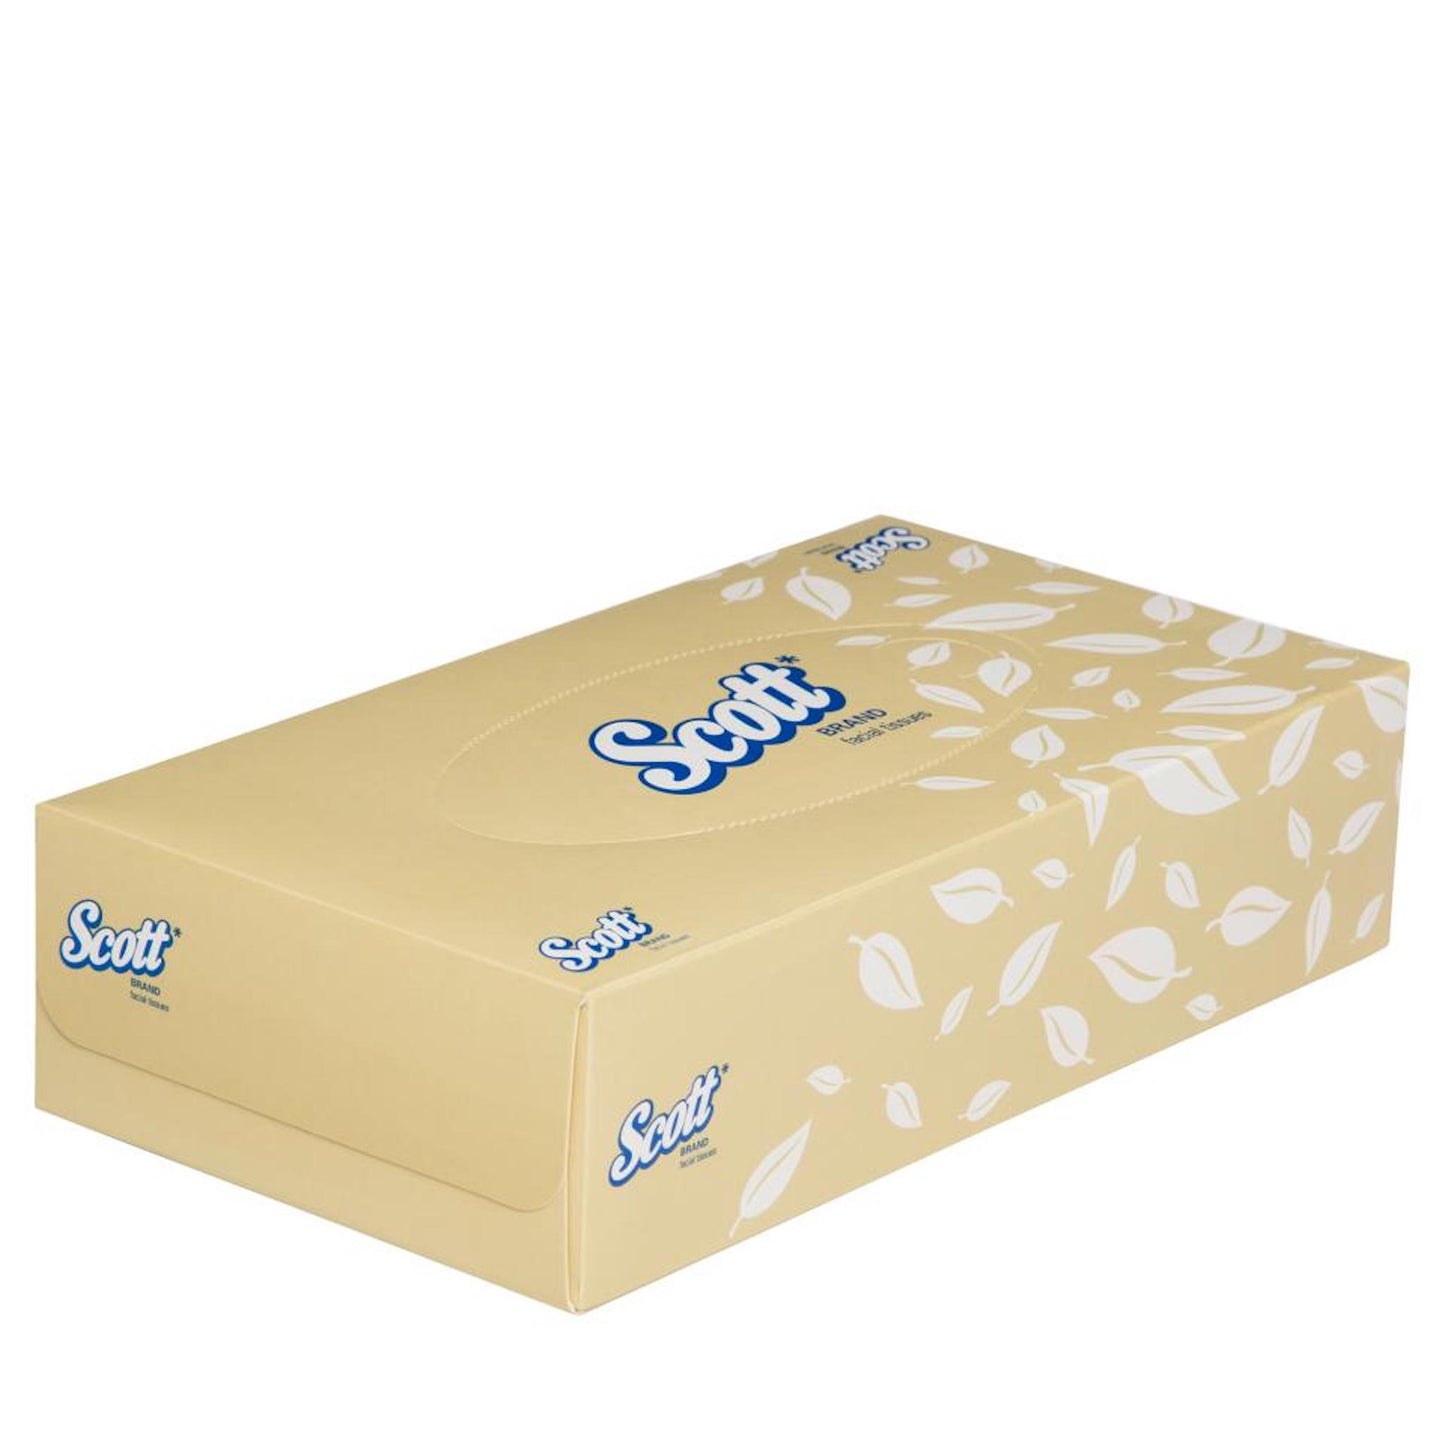 Scott Facial Tissues Pack 2 Ply - Carton (48 x 100pc Box)